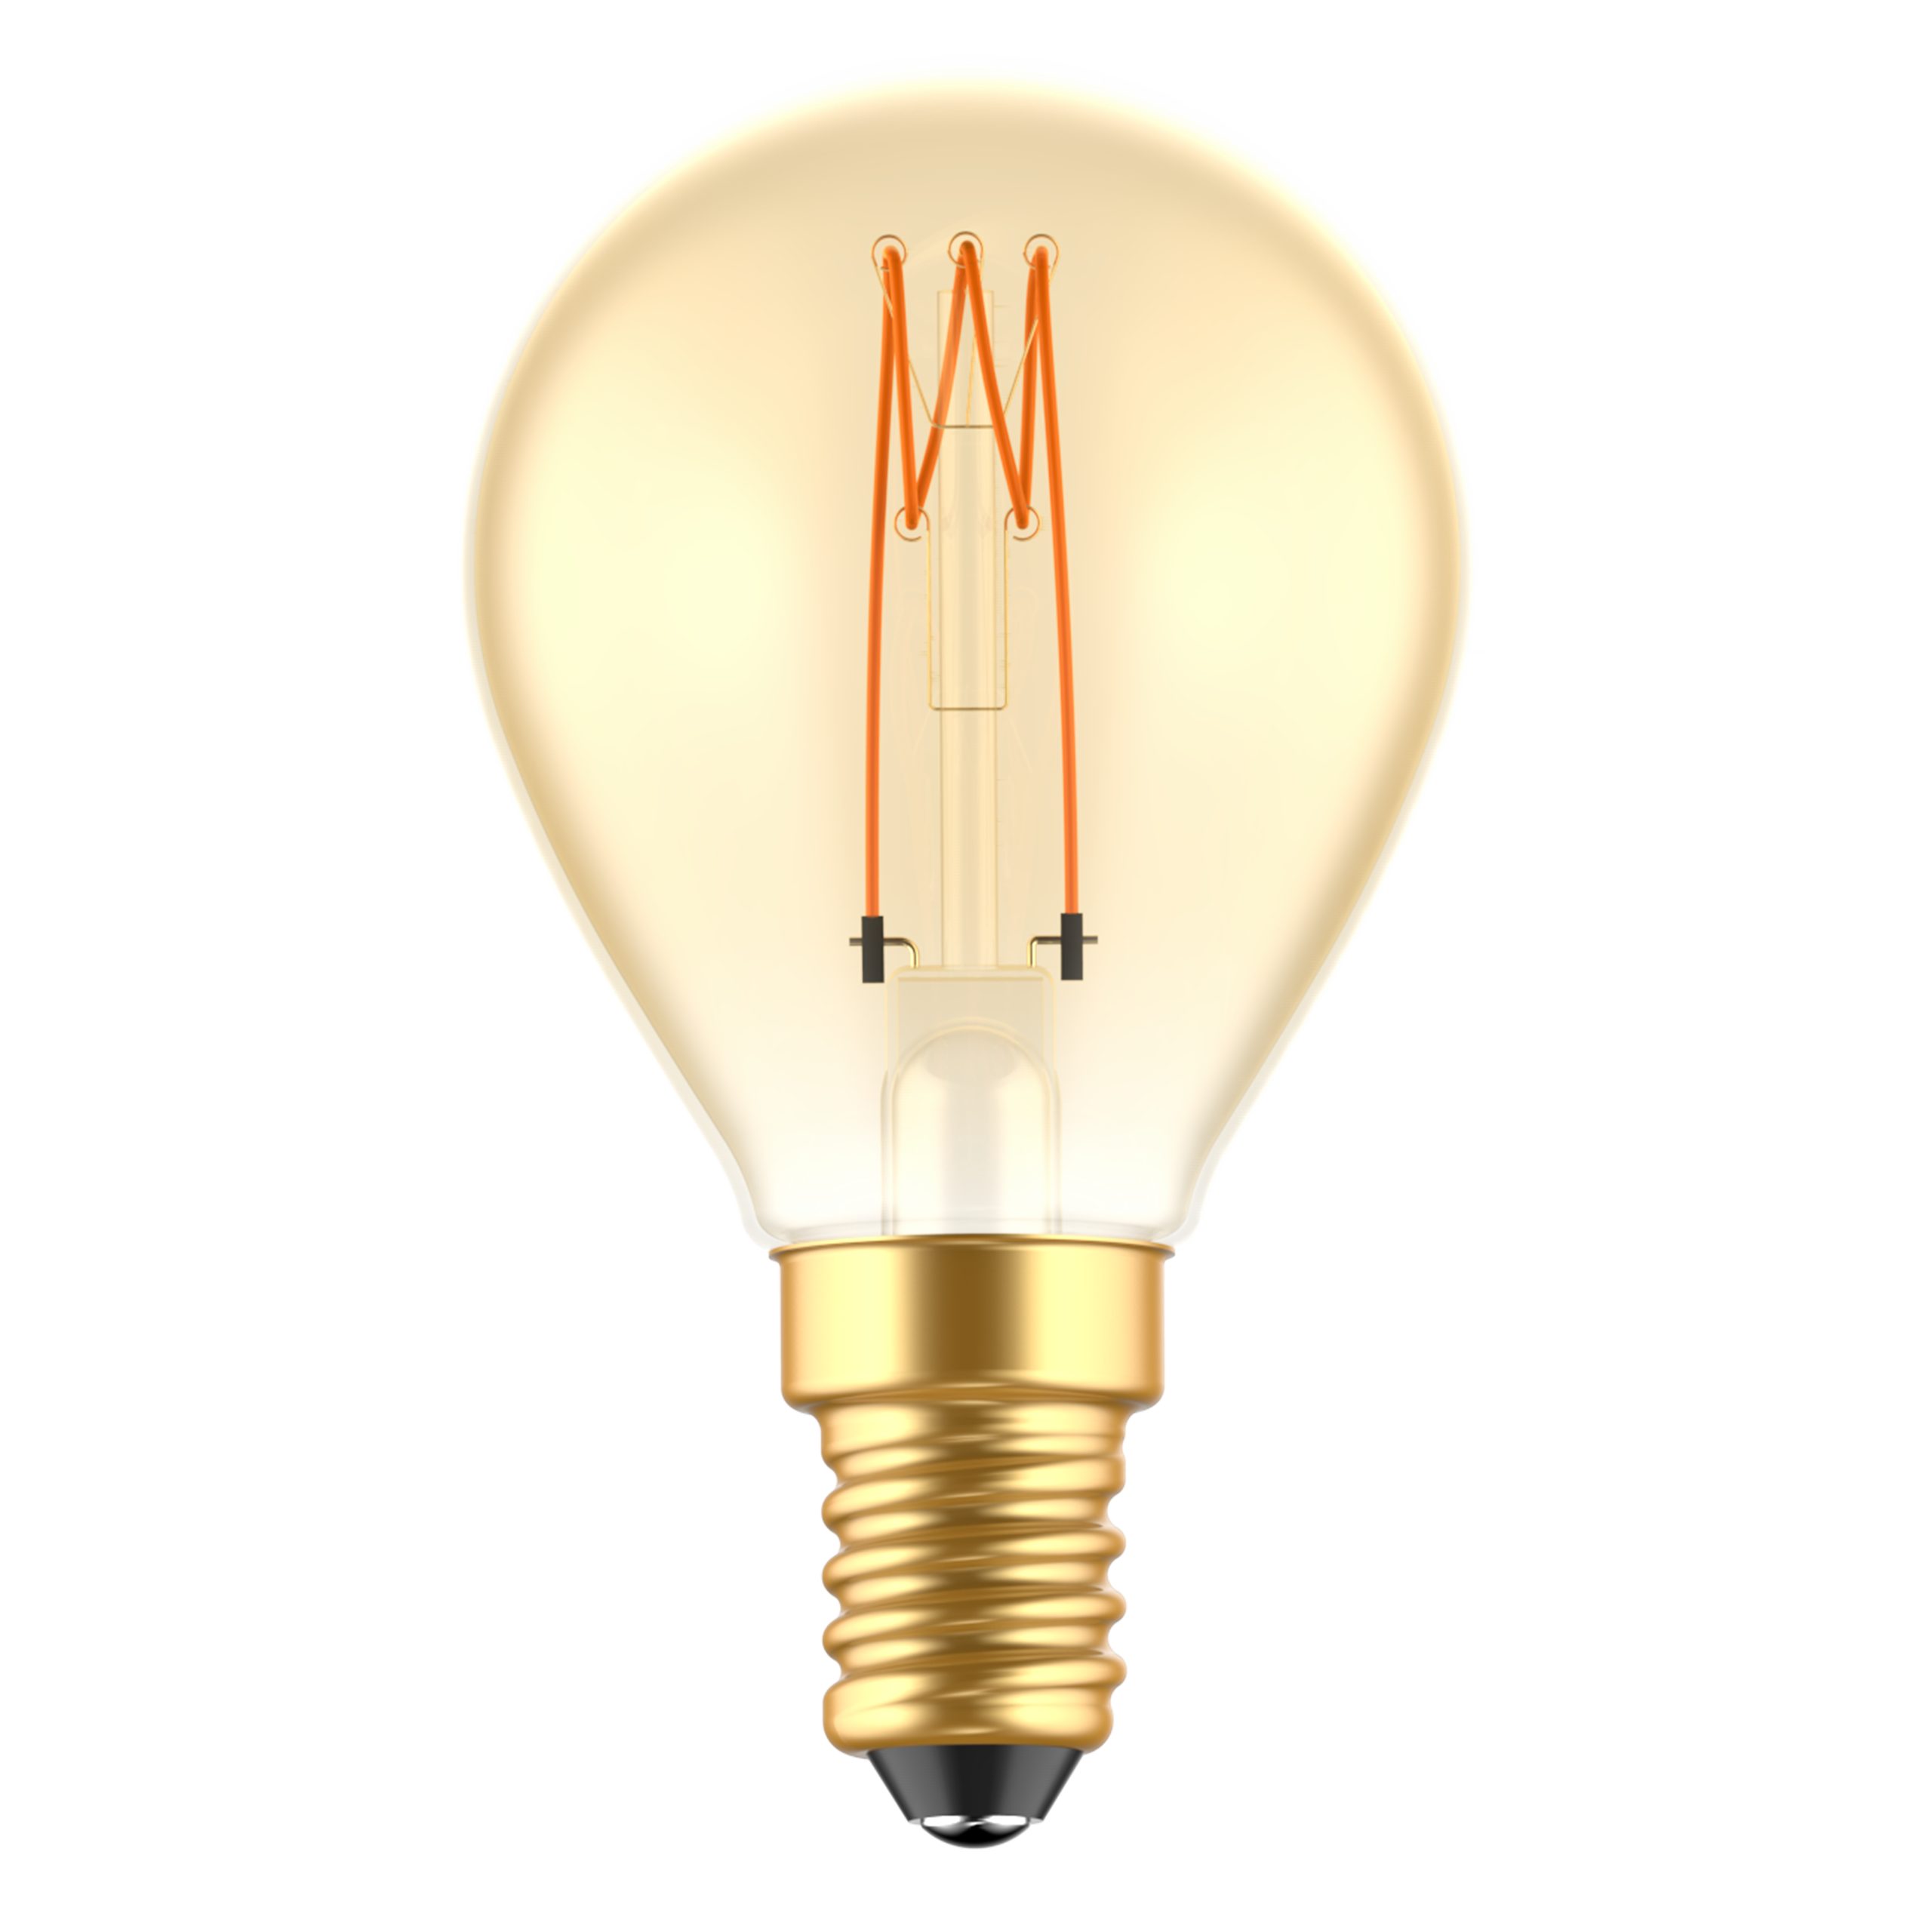 LED's light LED-Leuchtmittel 0620190 LED Kugel, E14, E14 dimmbar 2.5W extra-warmweiß Gold G45